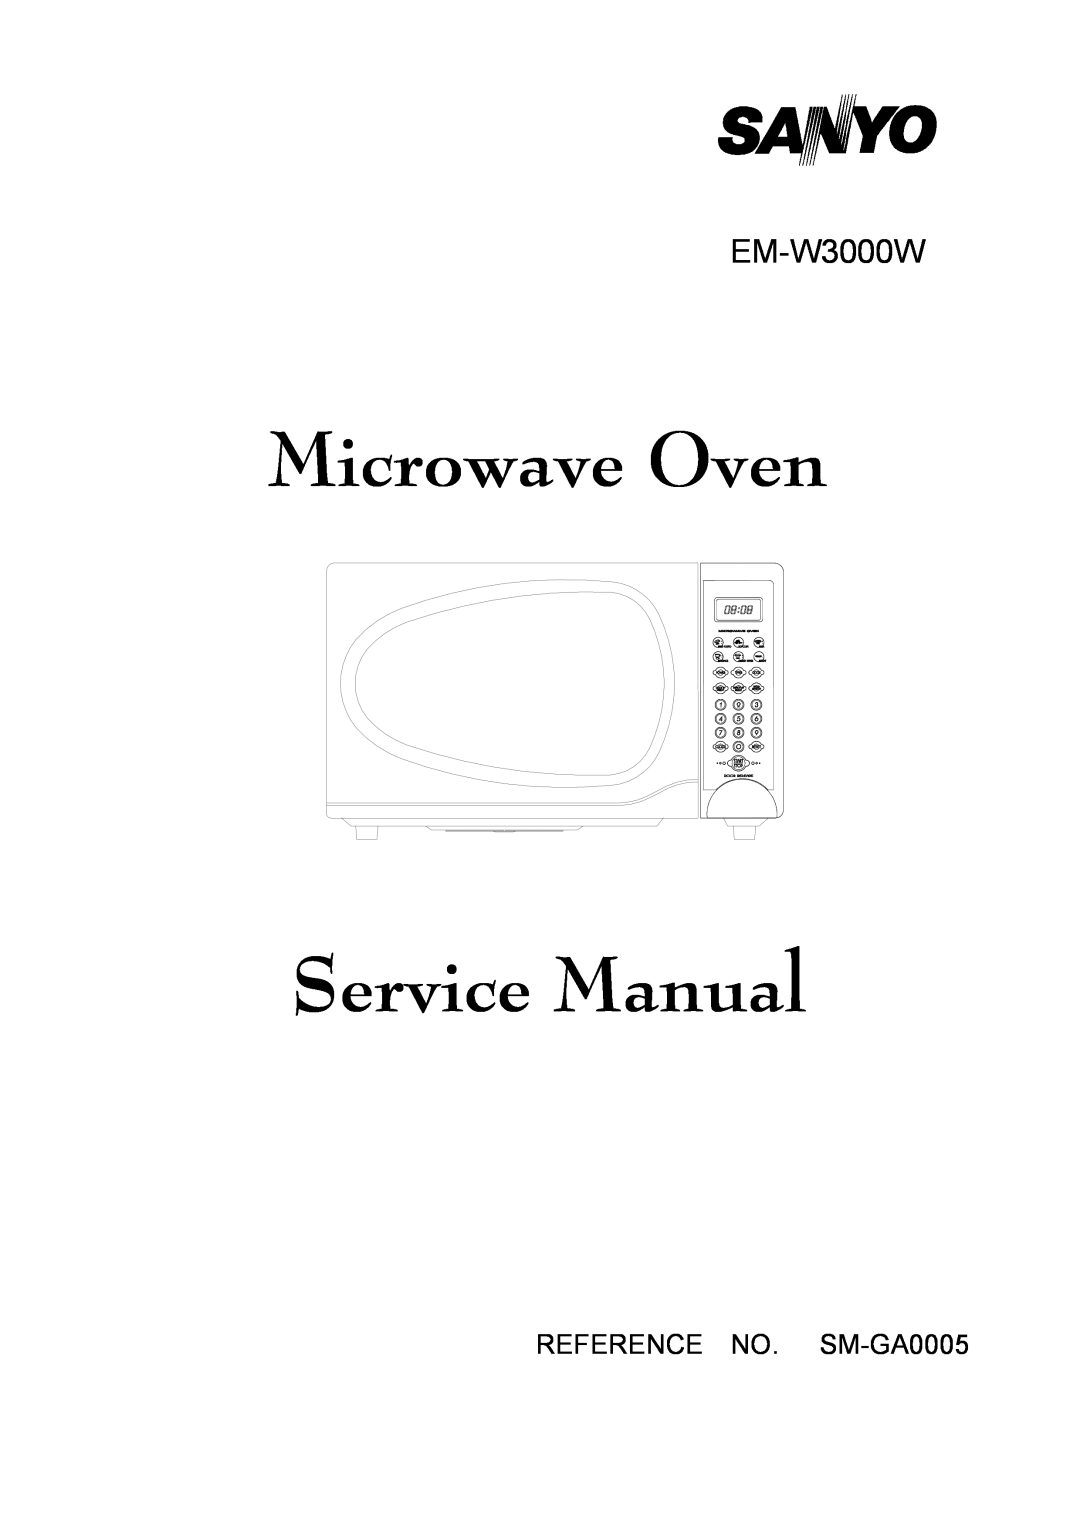 Sanyo service manual REFERENCE NO. SM-GA0005, EM-W3000W 